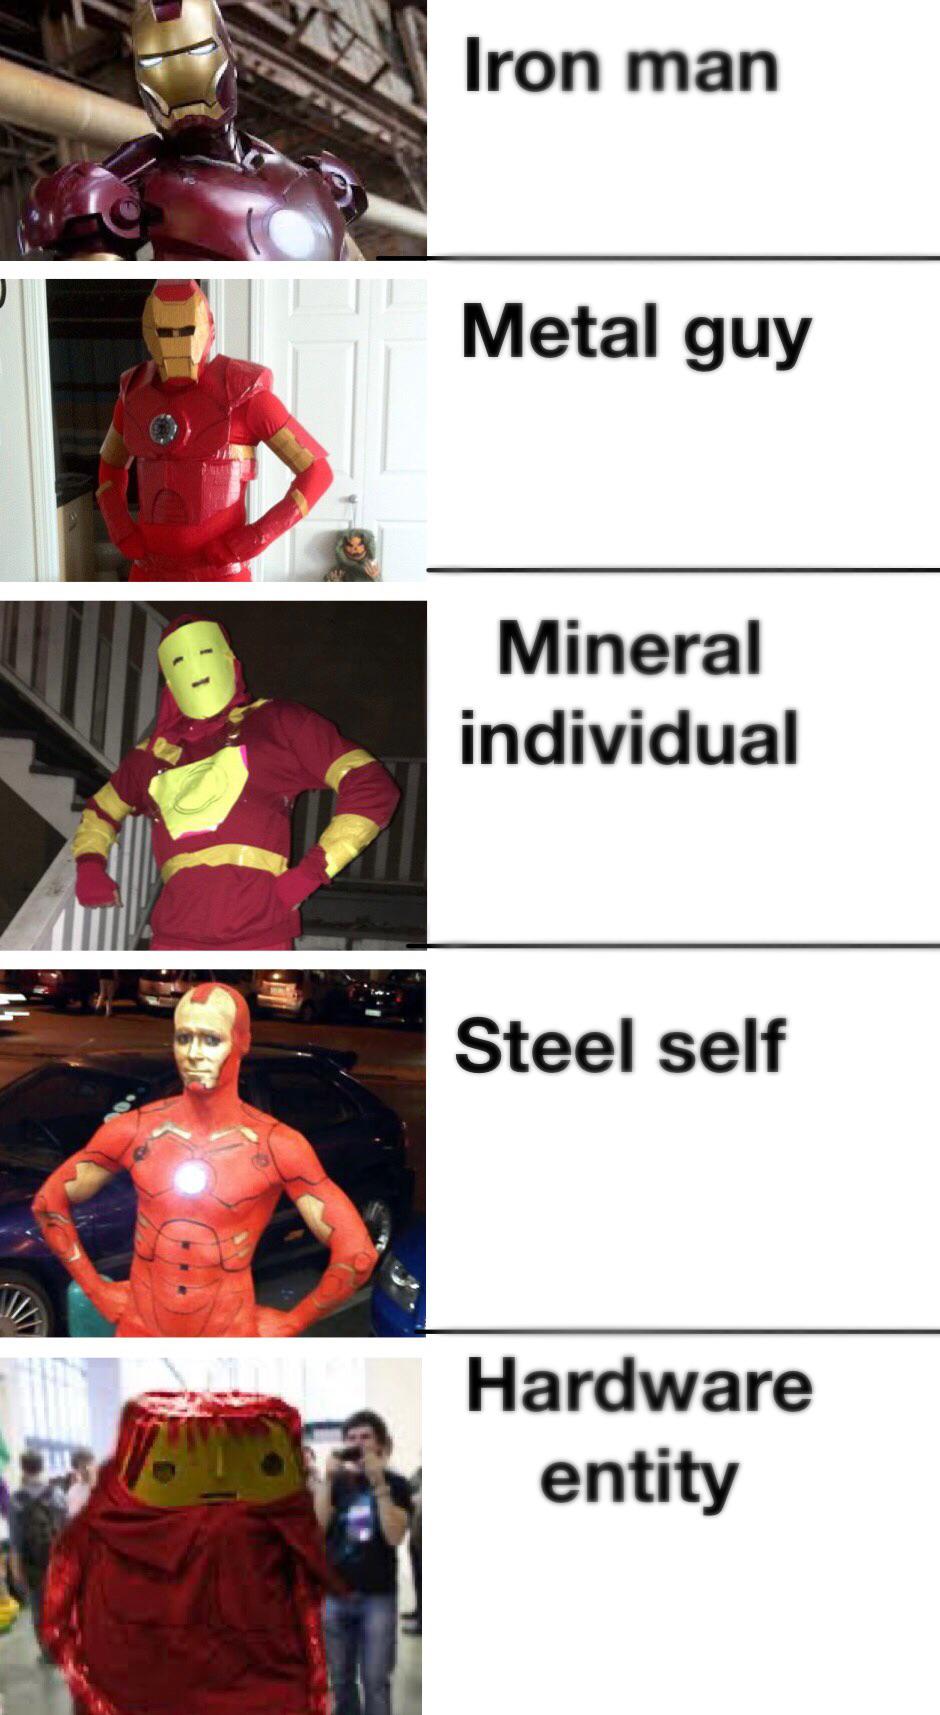 iron man - Iron man Metal guy Mineral individual Steel self Hardware entity